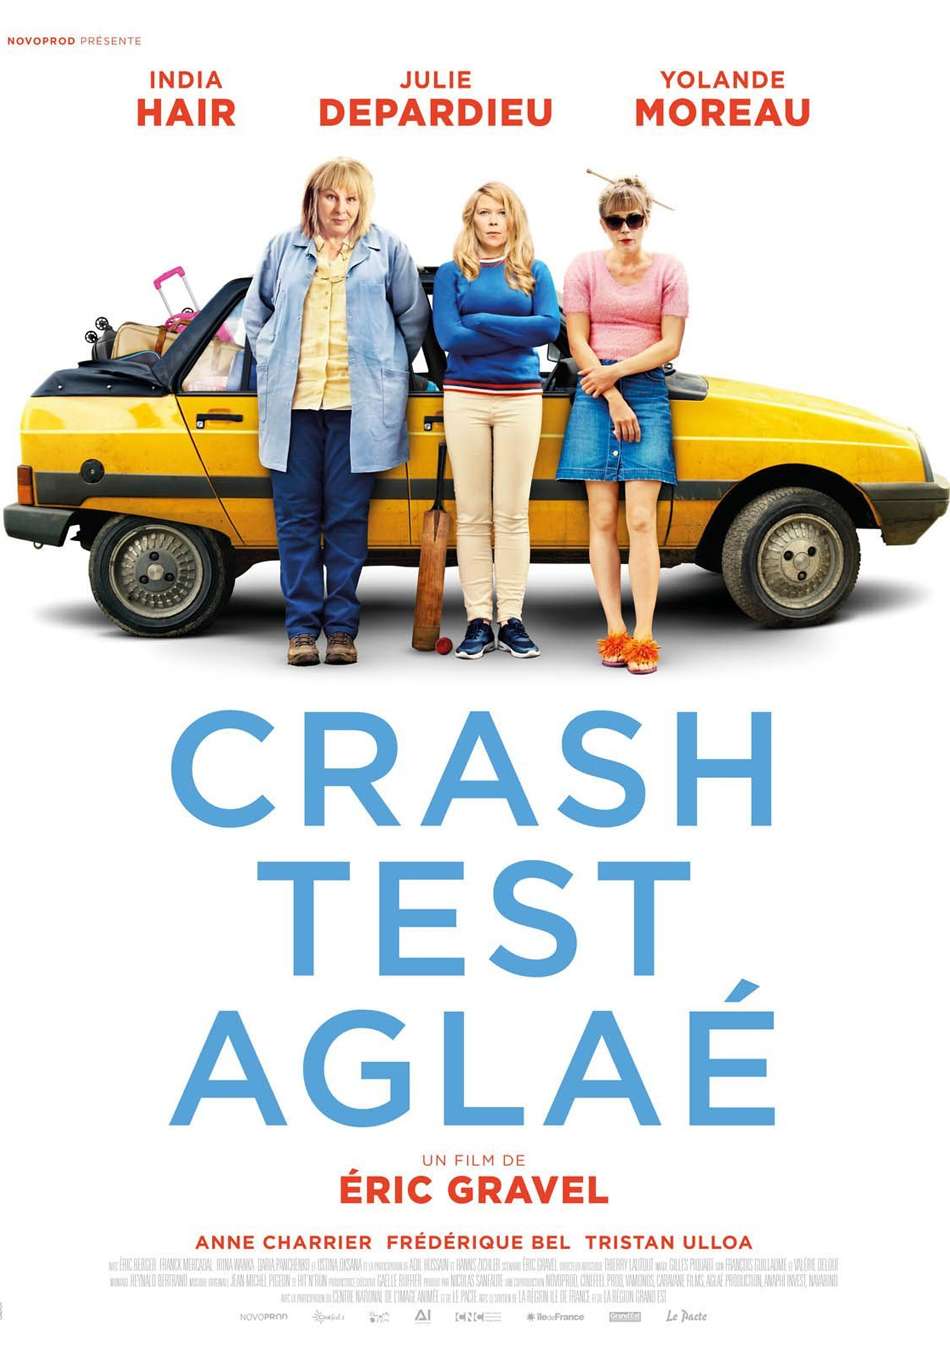 Crash test Aglaé ΜΕΤΩΠΙΚΗ ΣΥΓΚΡΟΥΣΗ Poster